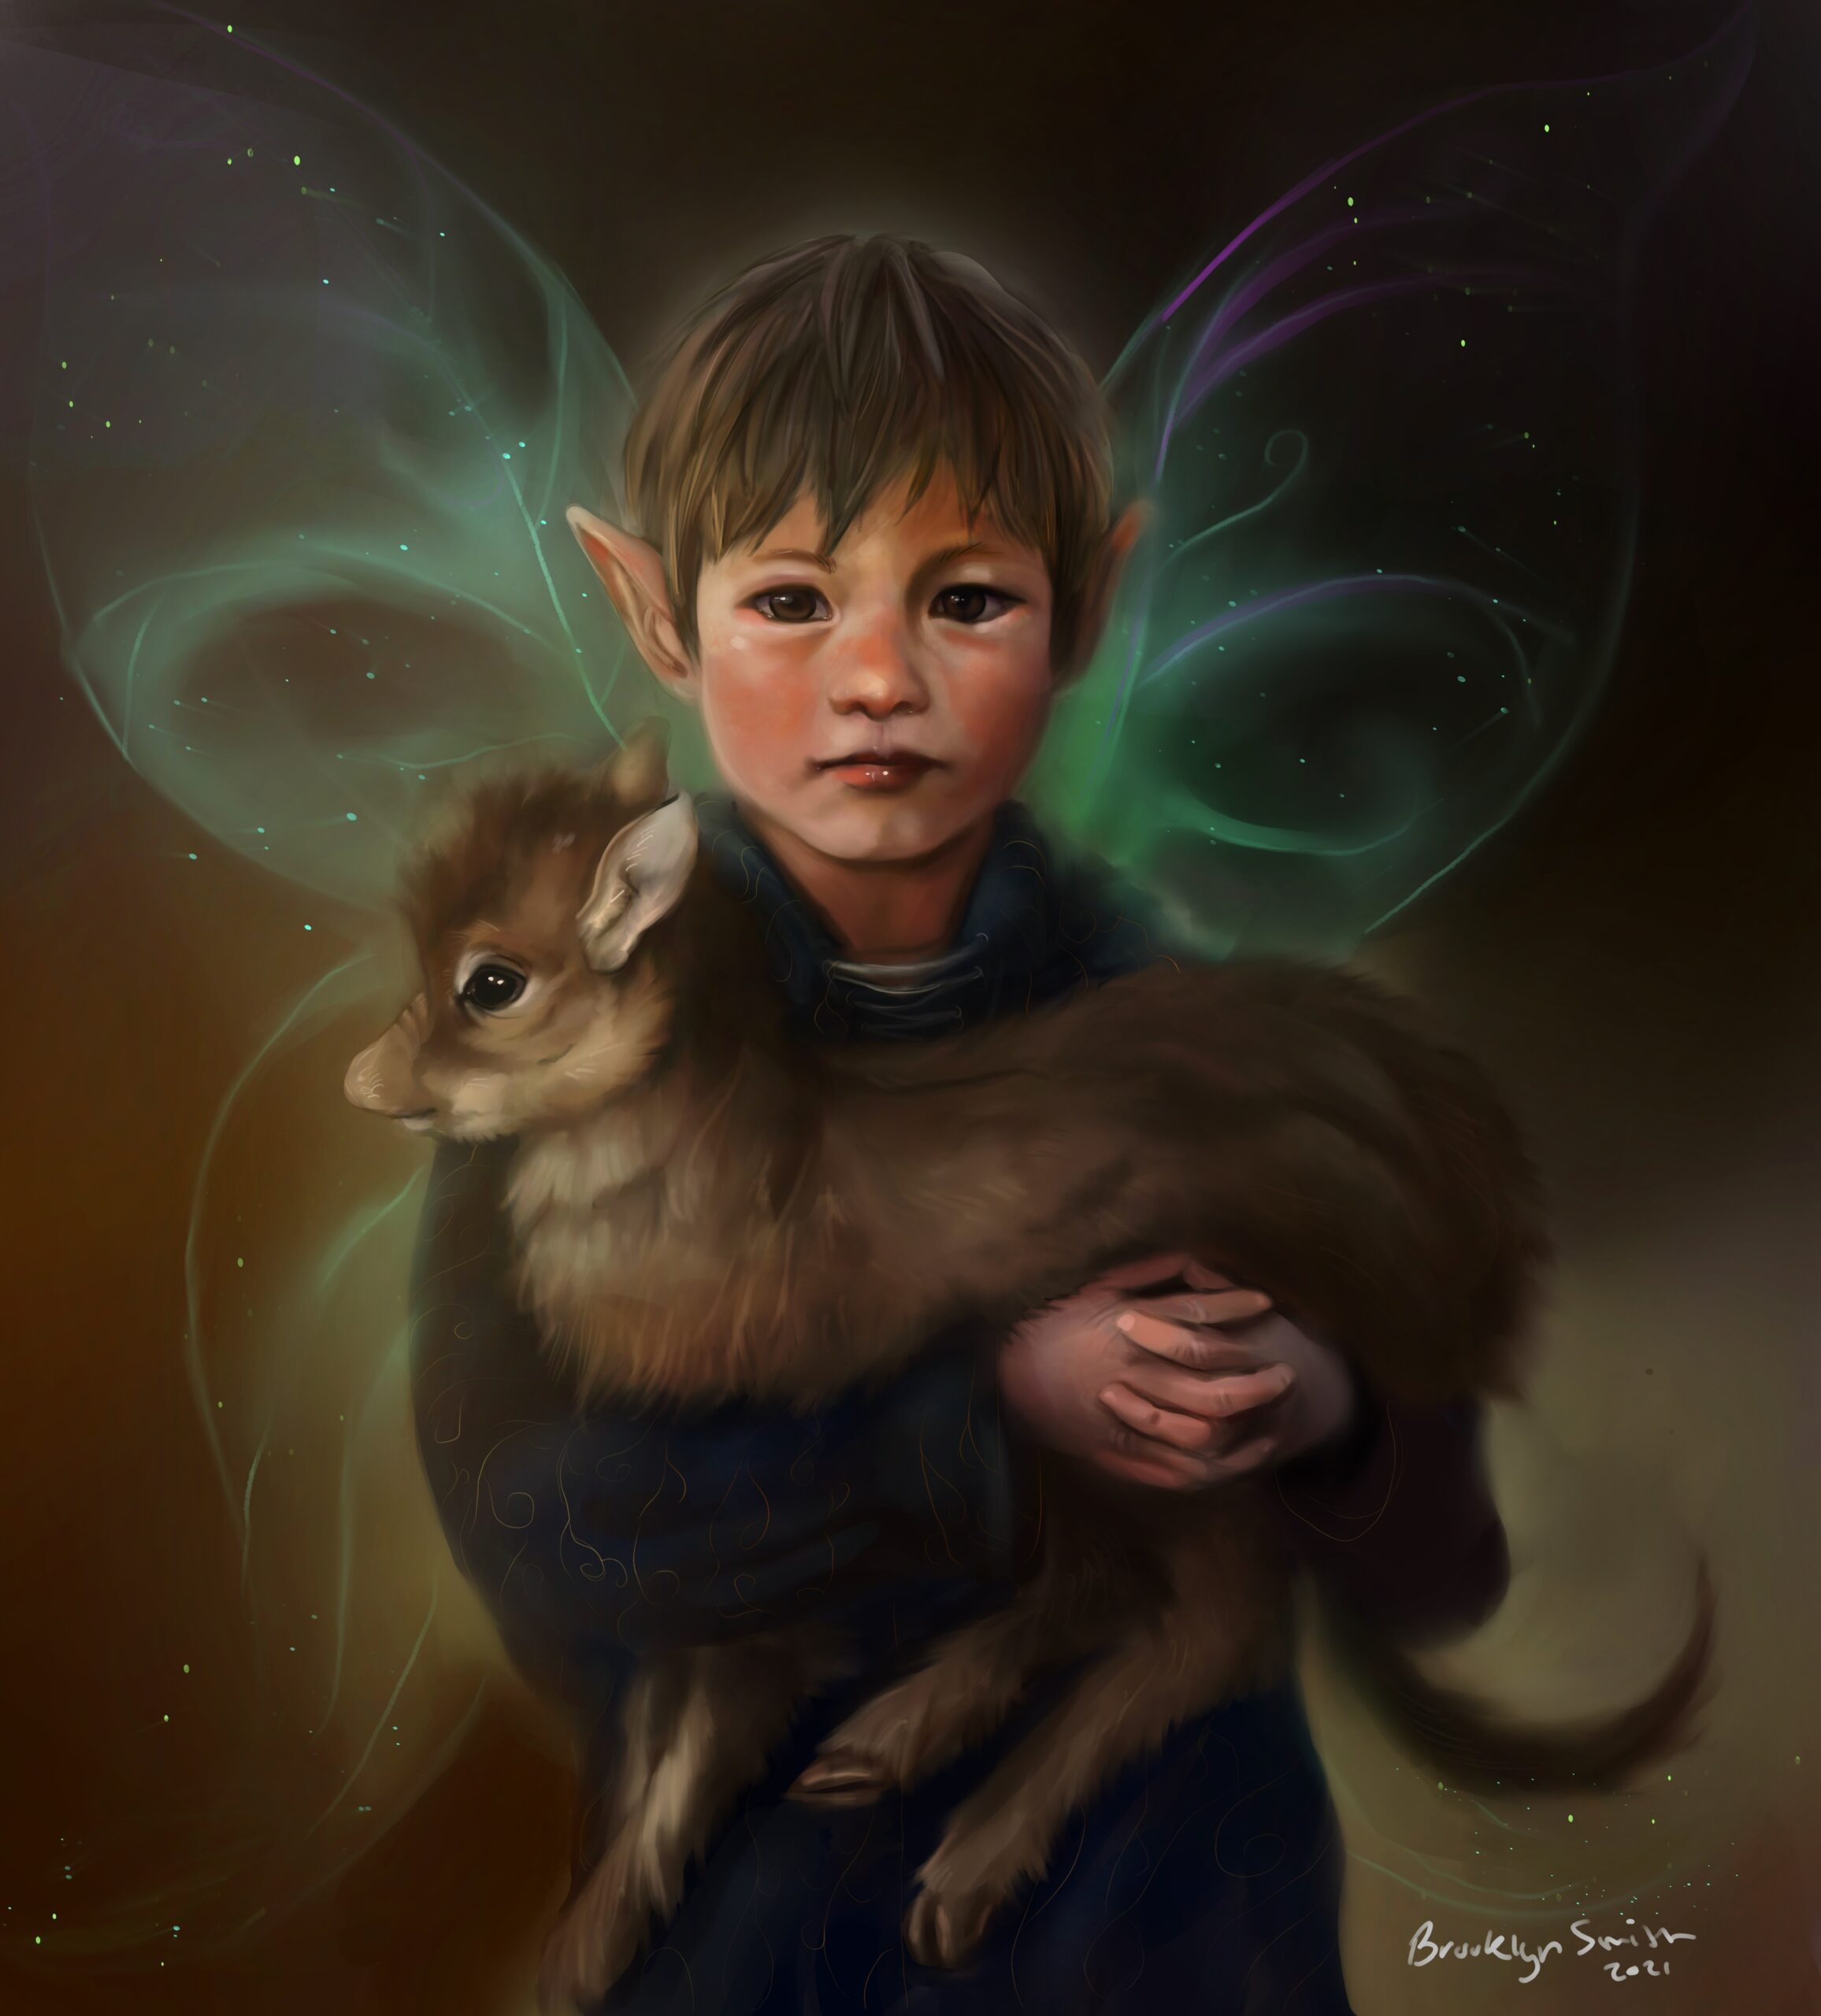 Boy holding creature